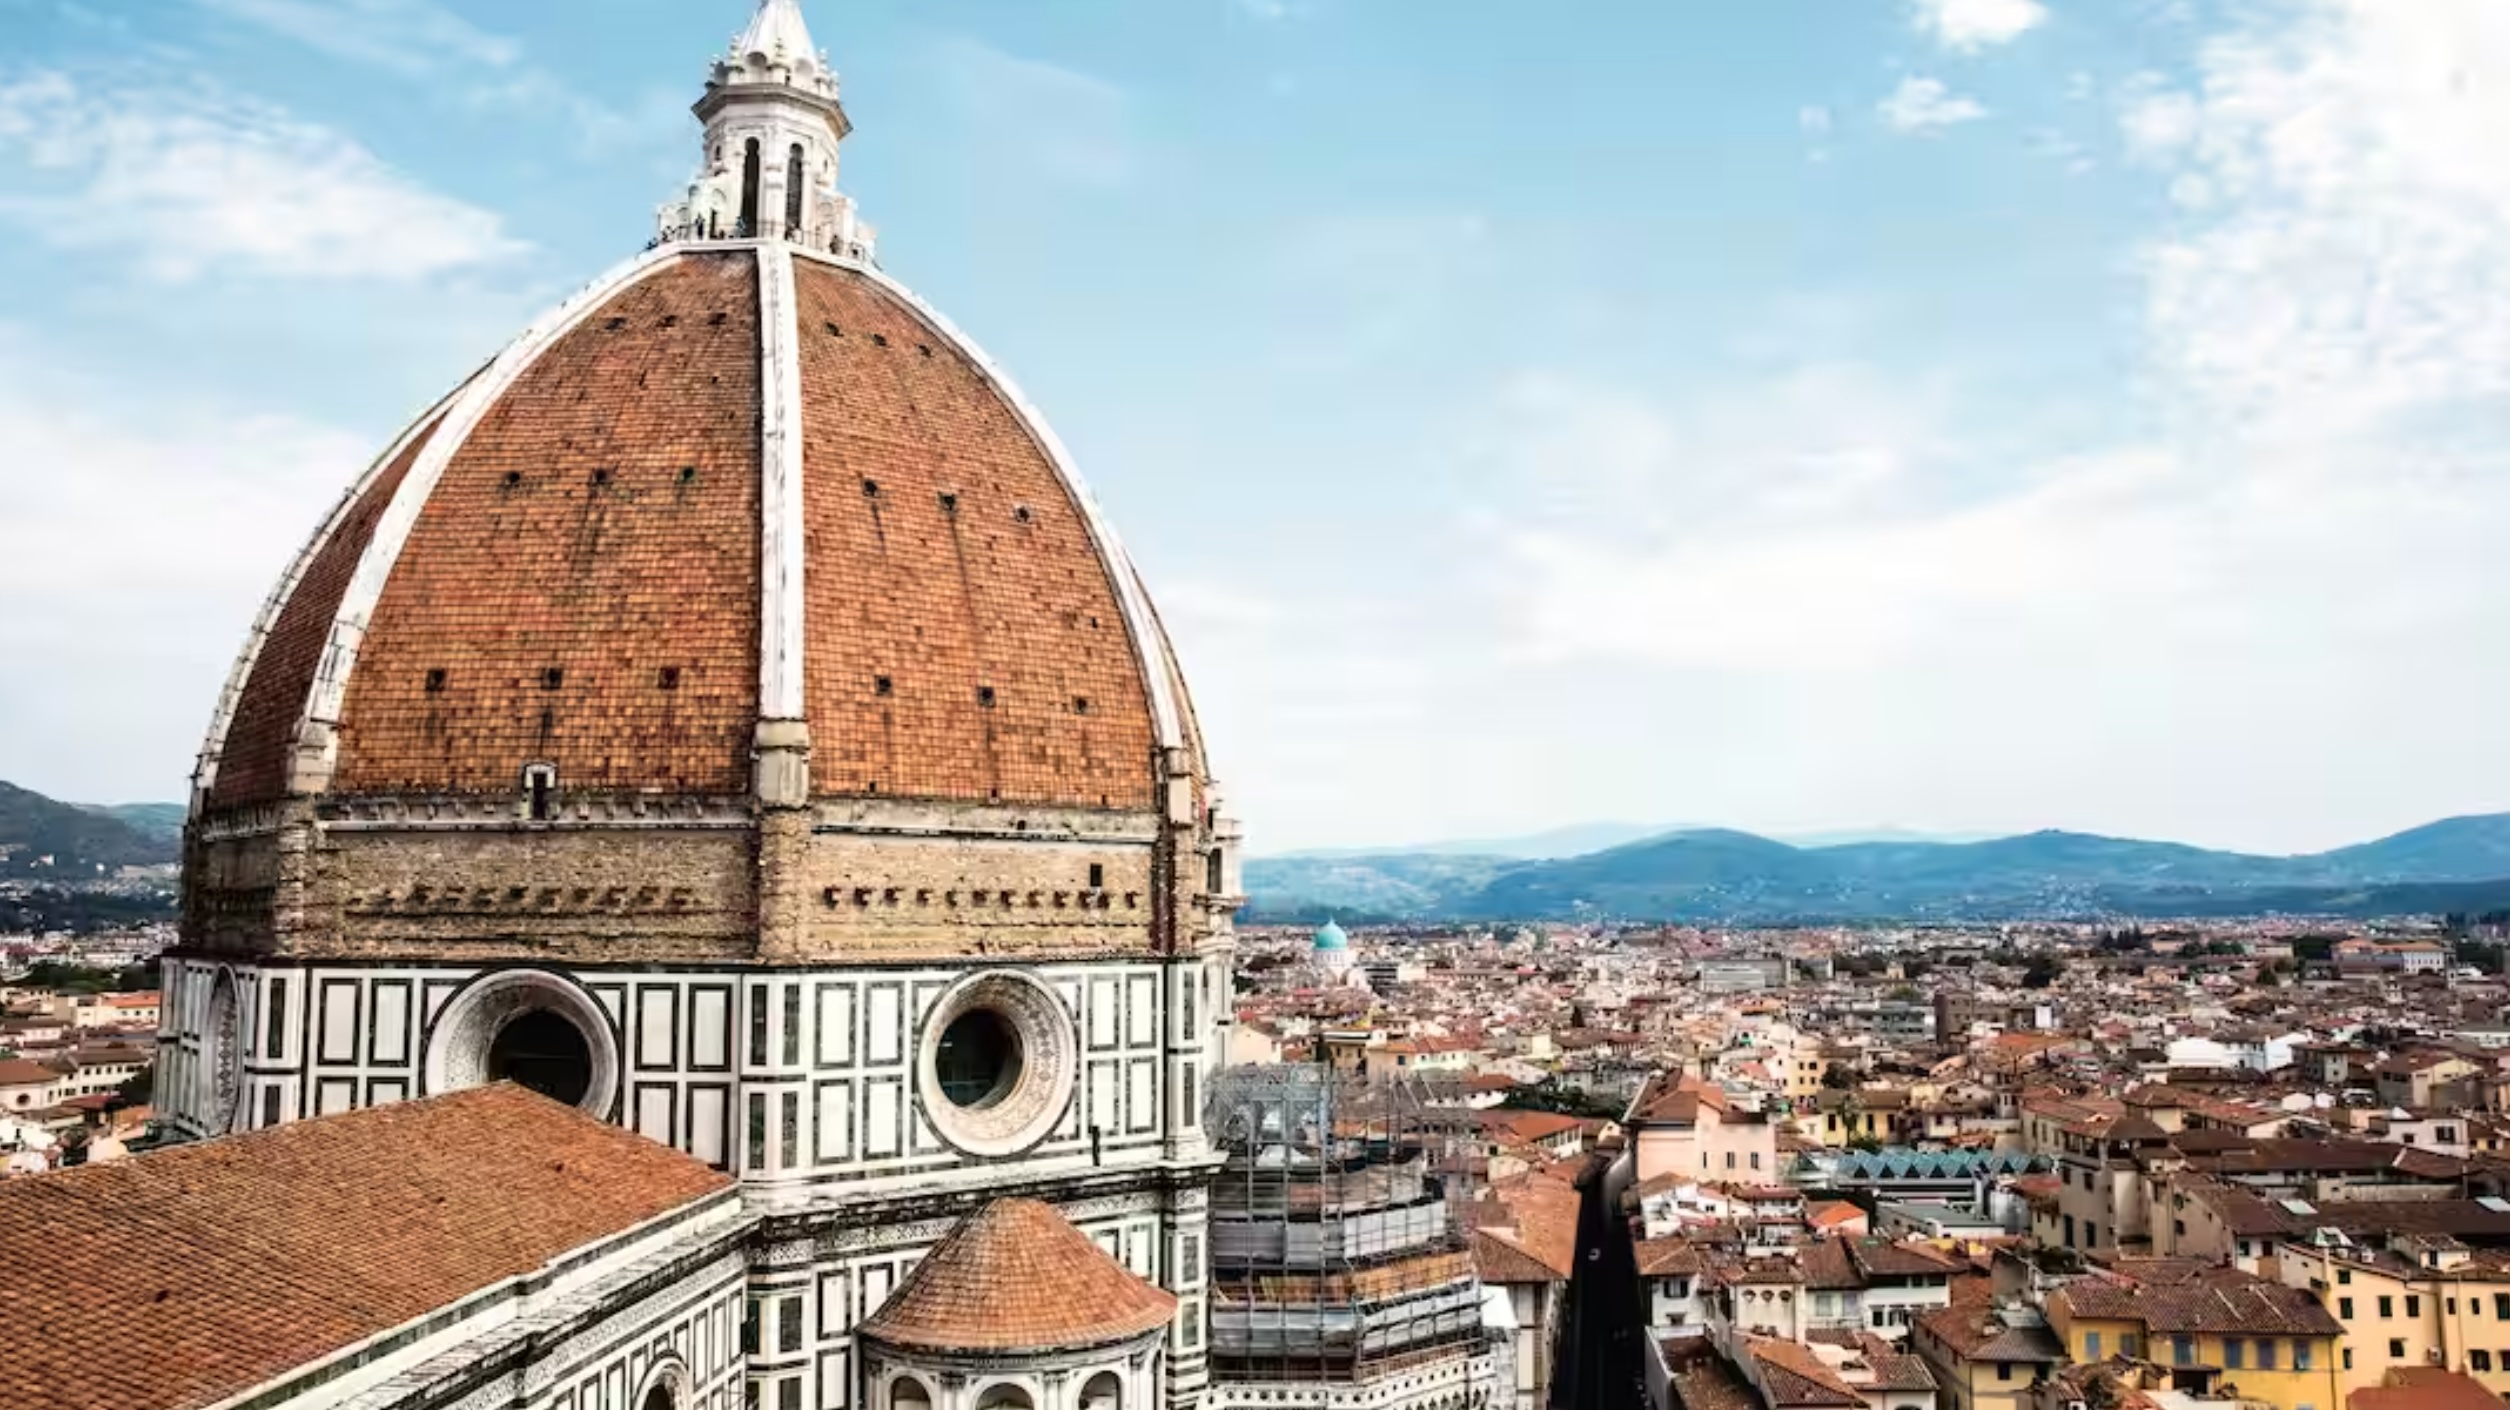 Brunelleschi's dome, Cathedral of Santa Maria del Fiore, Florence